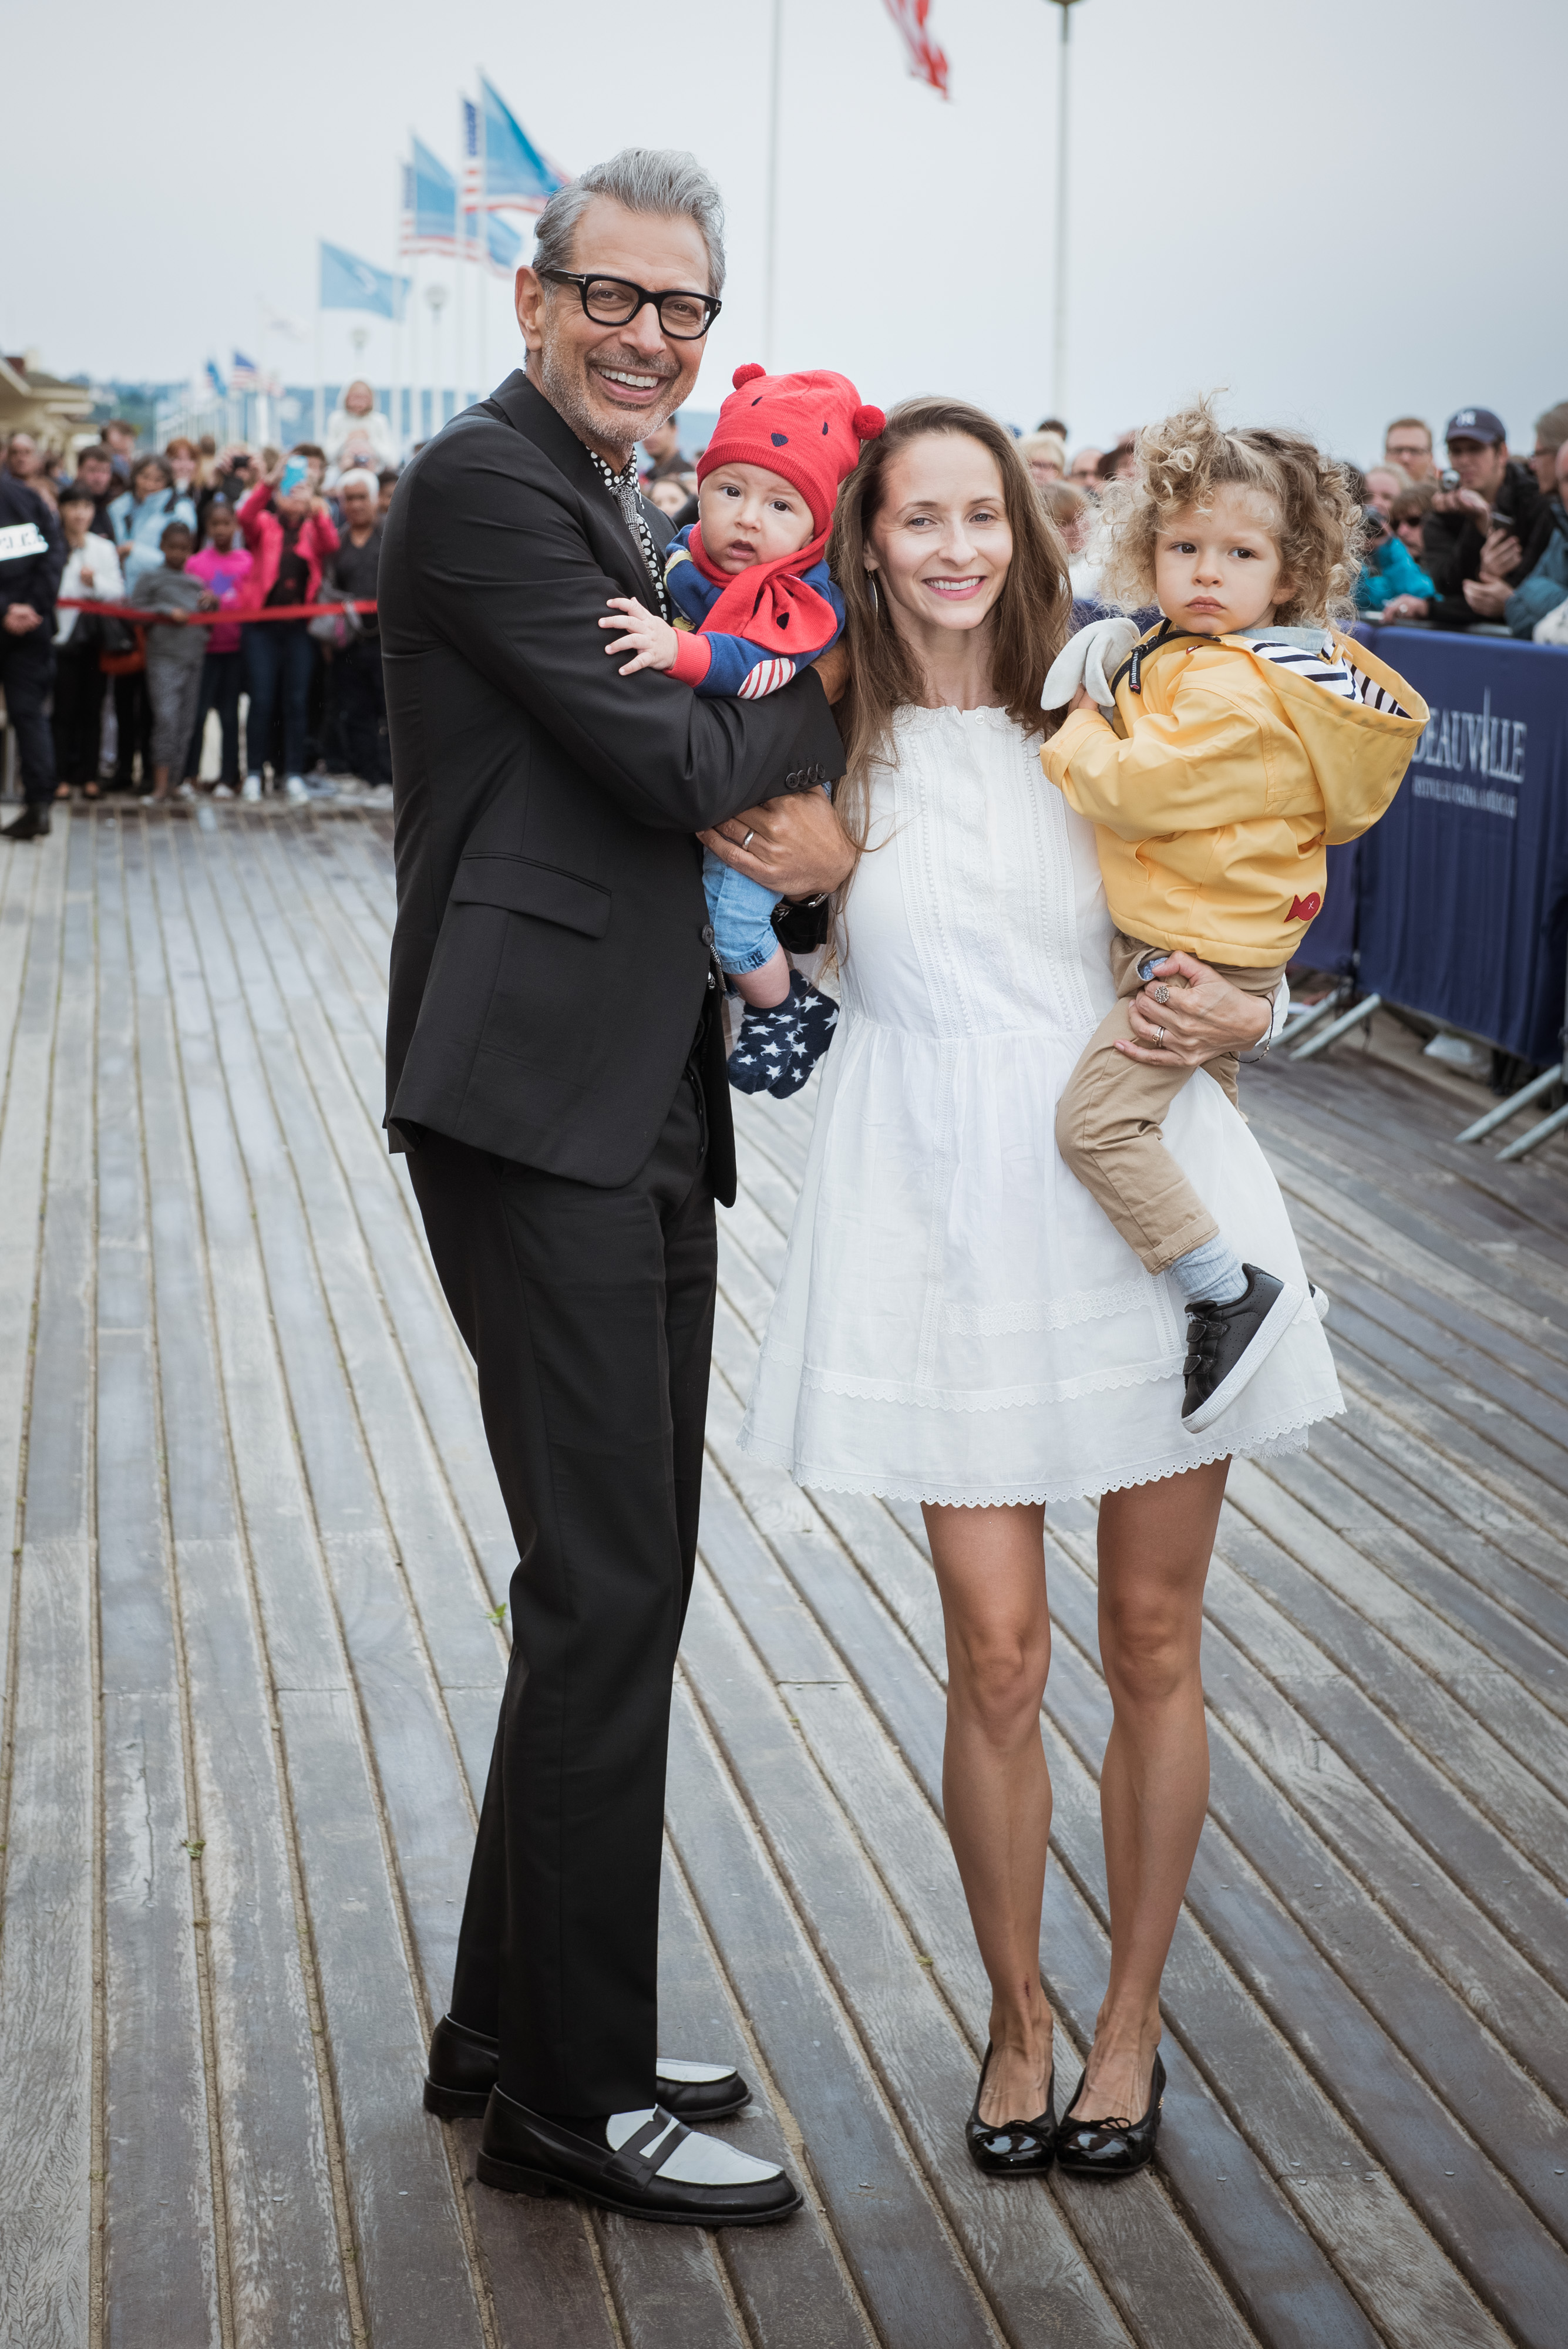 Jeff Goldblum and Emilie Livingston announced both of their sons' births on social media